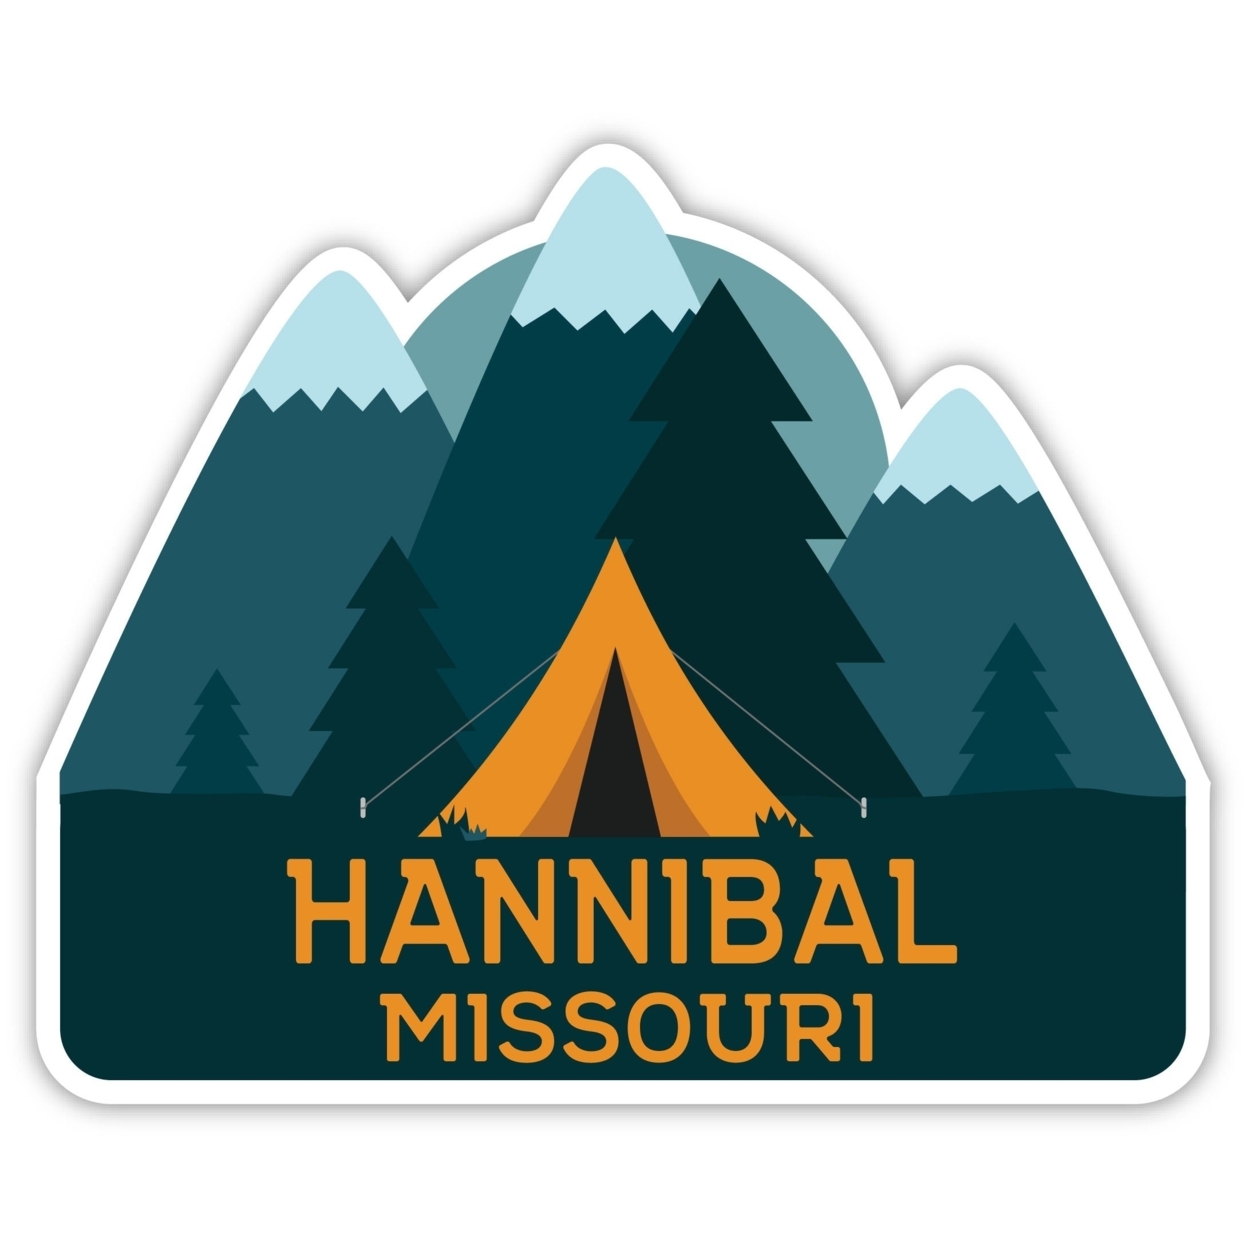 Hannibal Missouri Souvenir Decorative Stickers (Choose Theme And Size) - Single Unit, 2-Inch, Camp Life